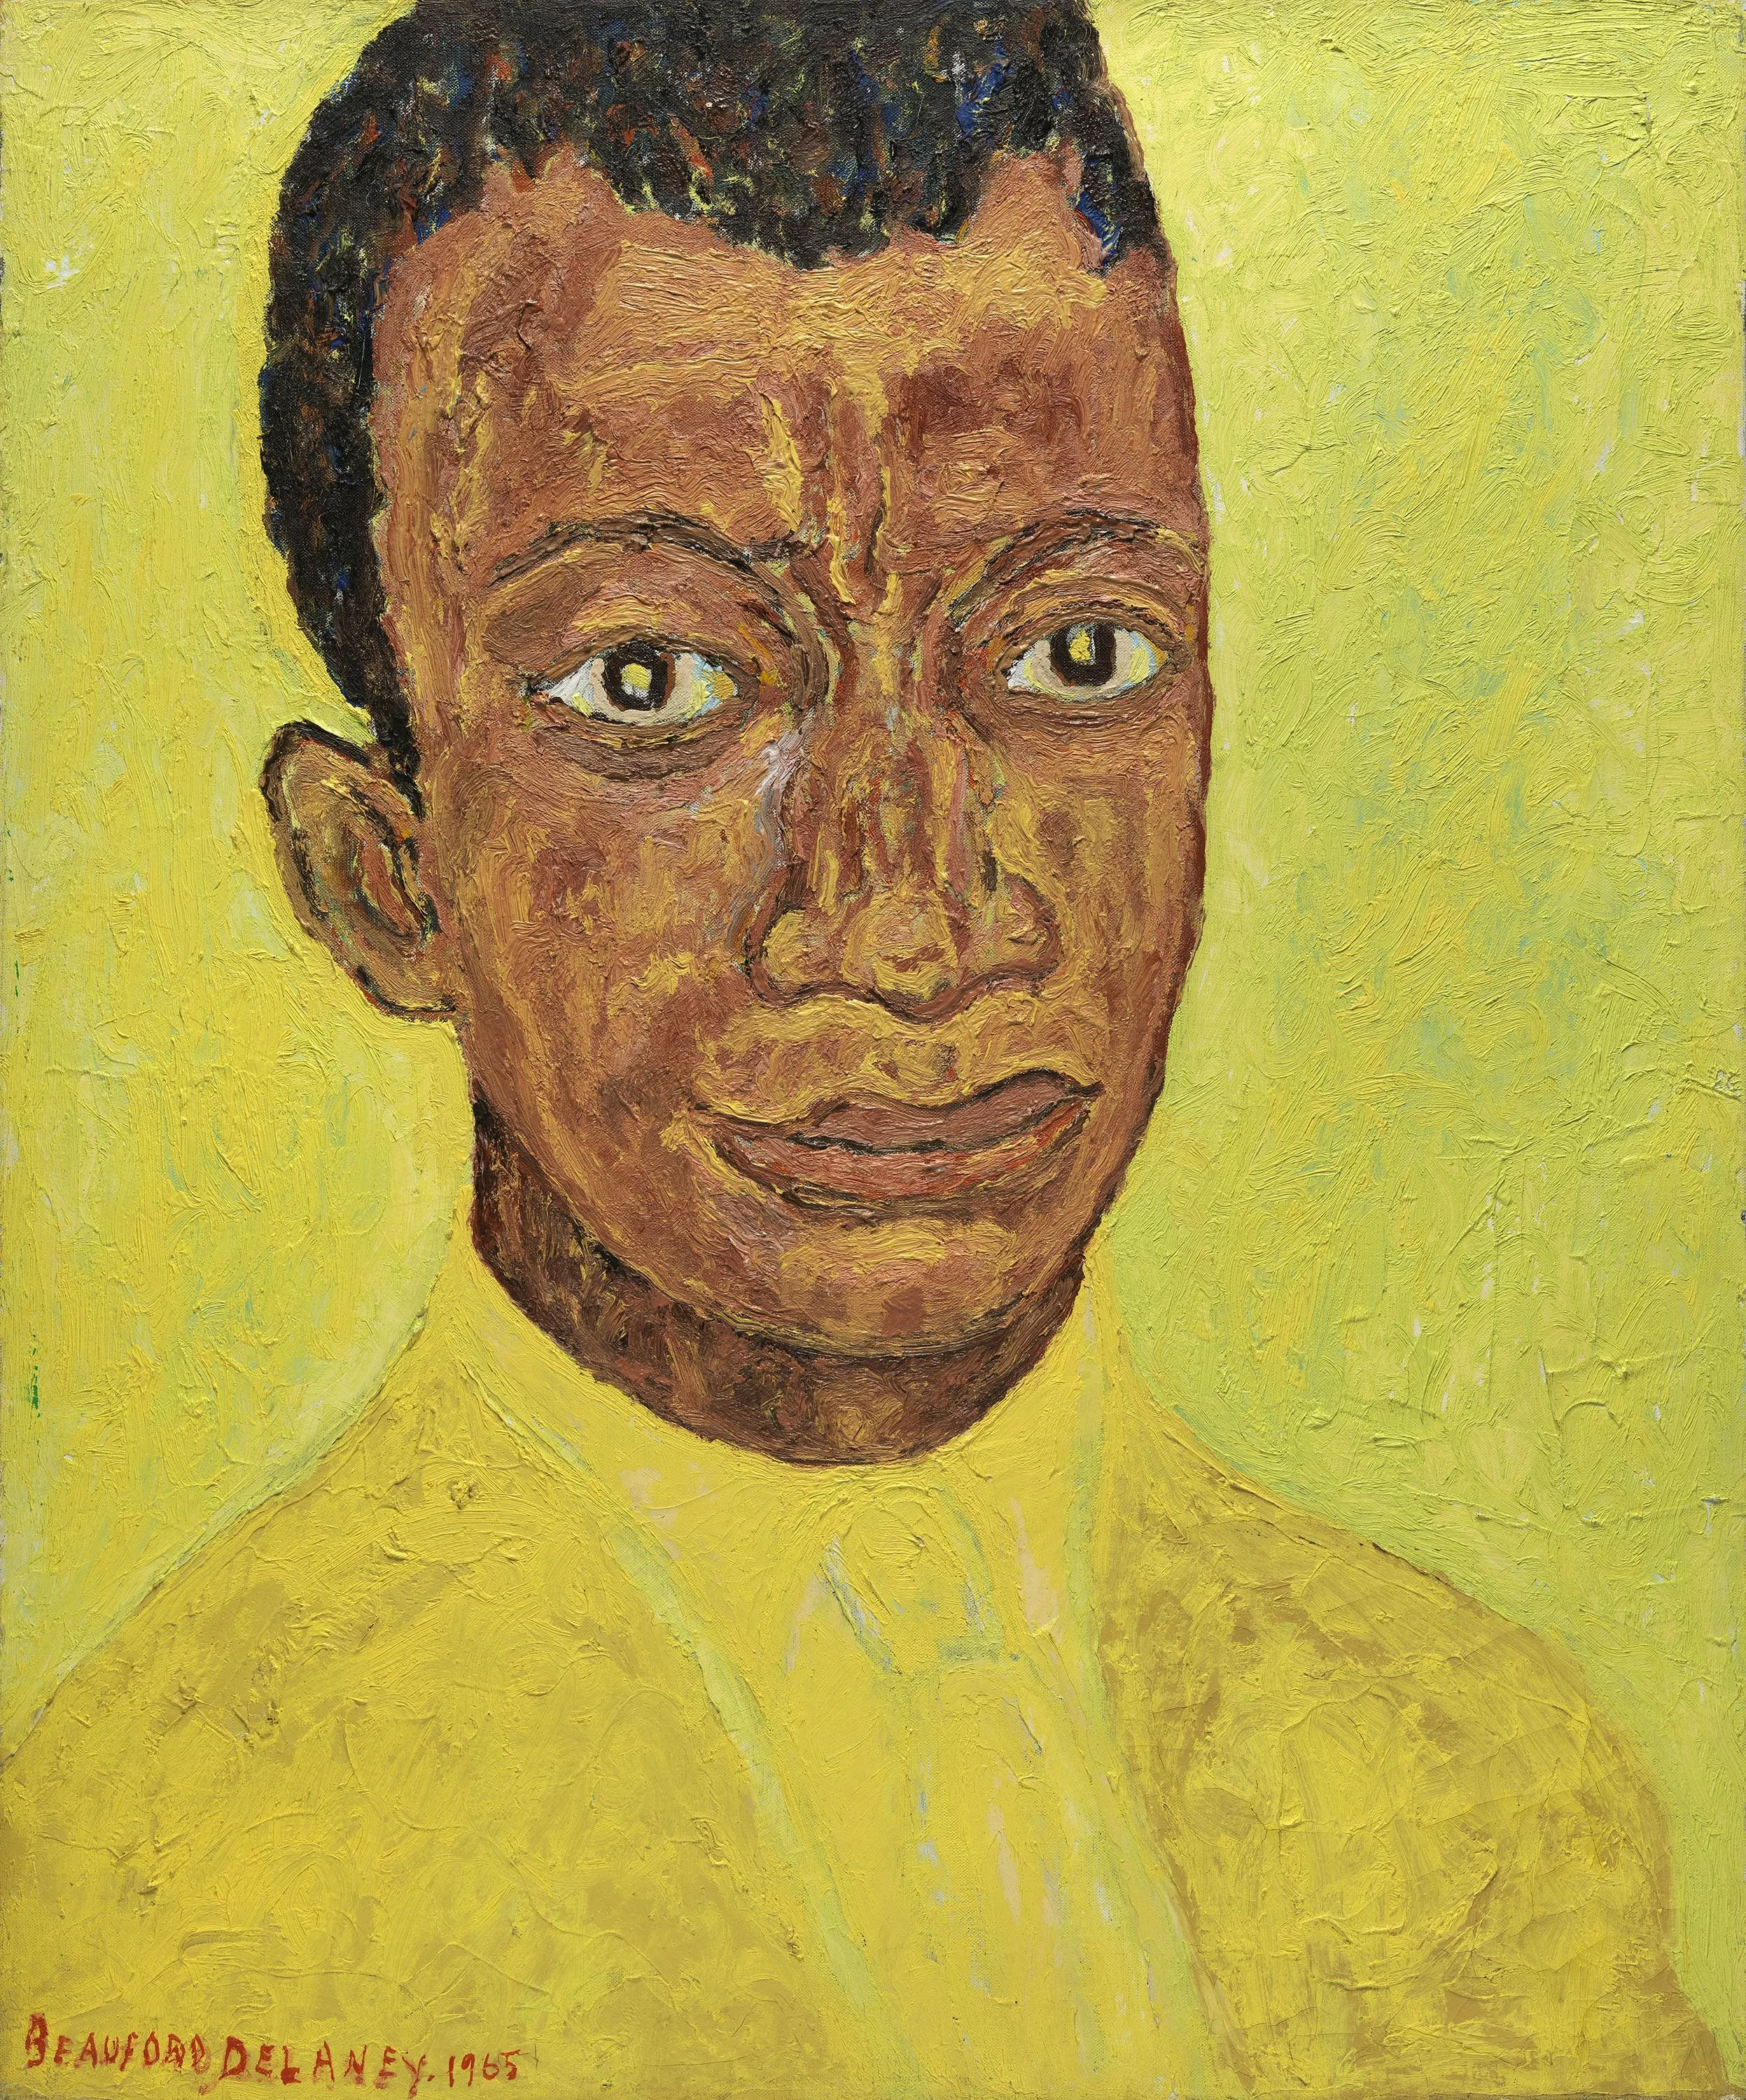 Portrait of James Baldwin, Beauford Delaney